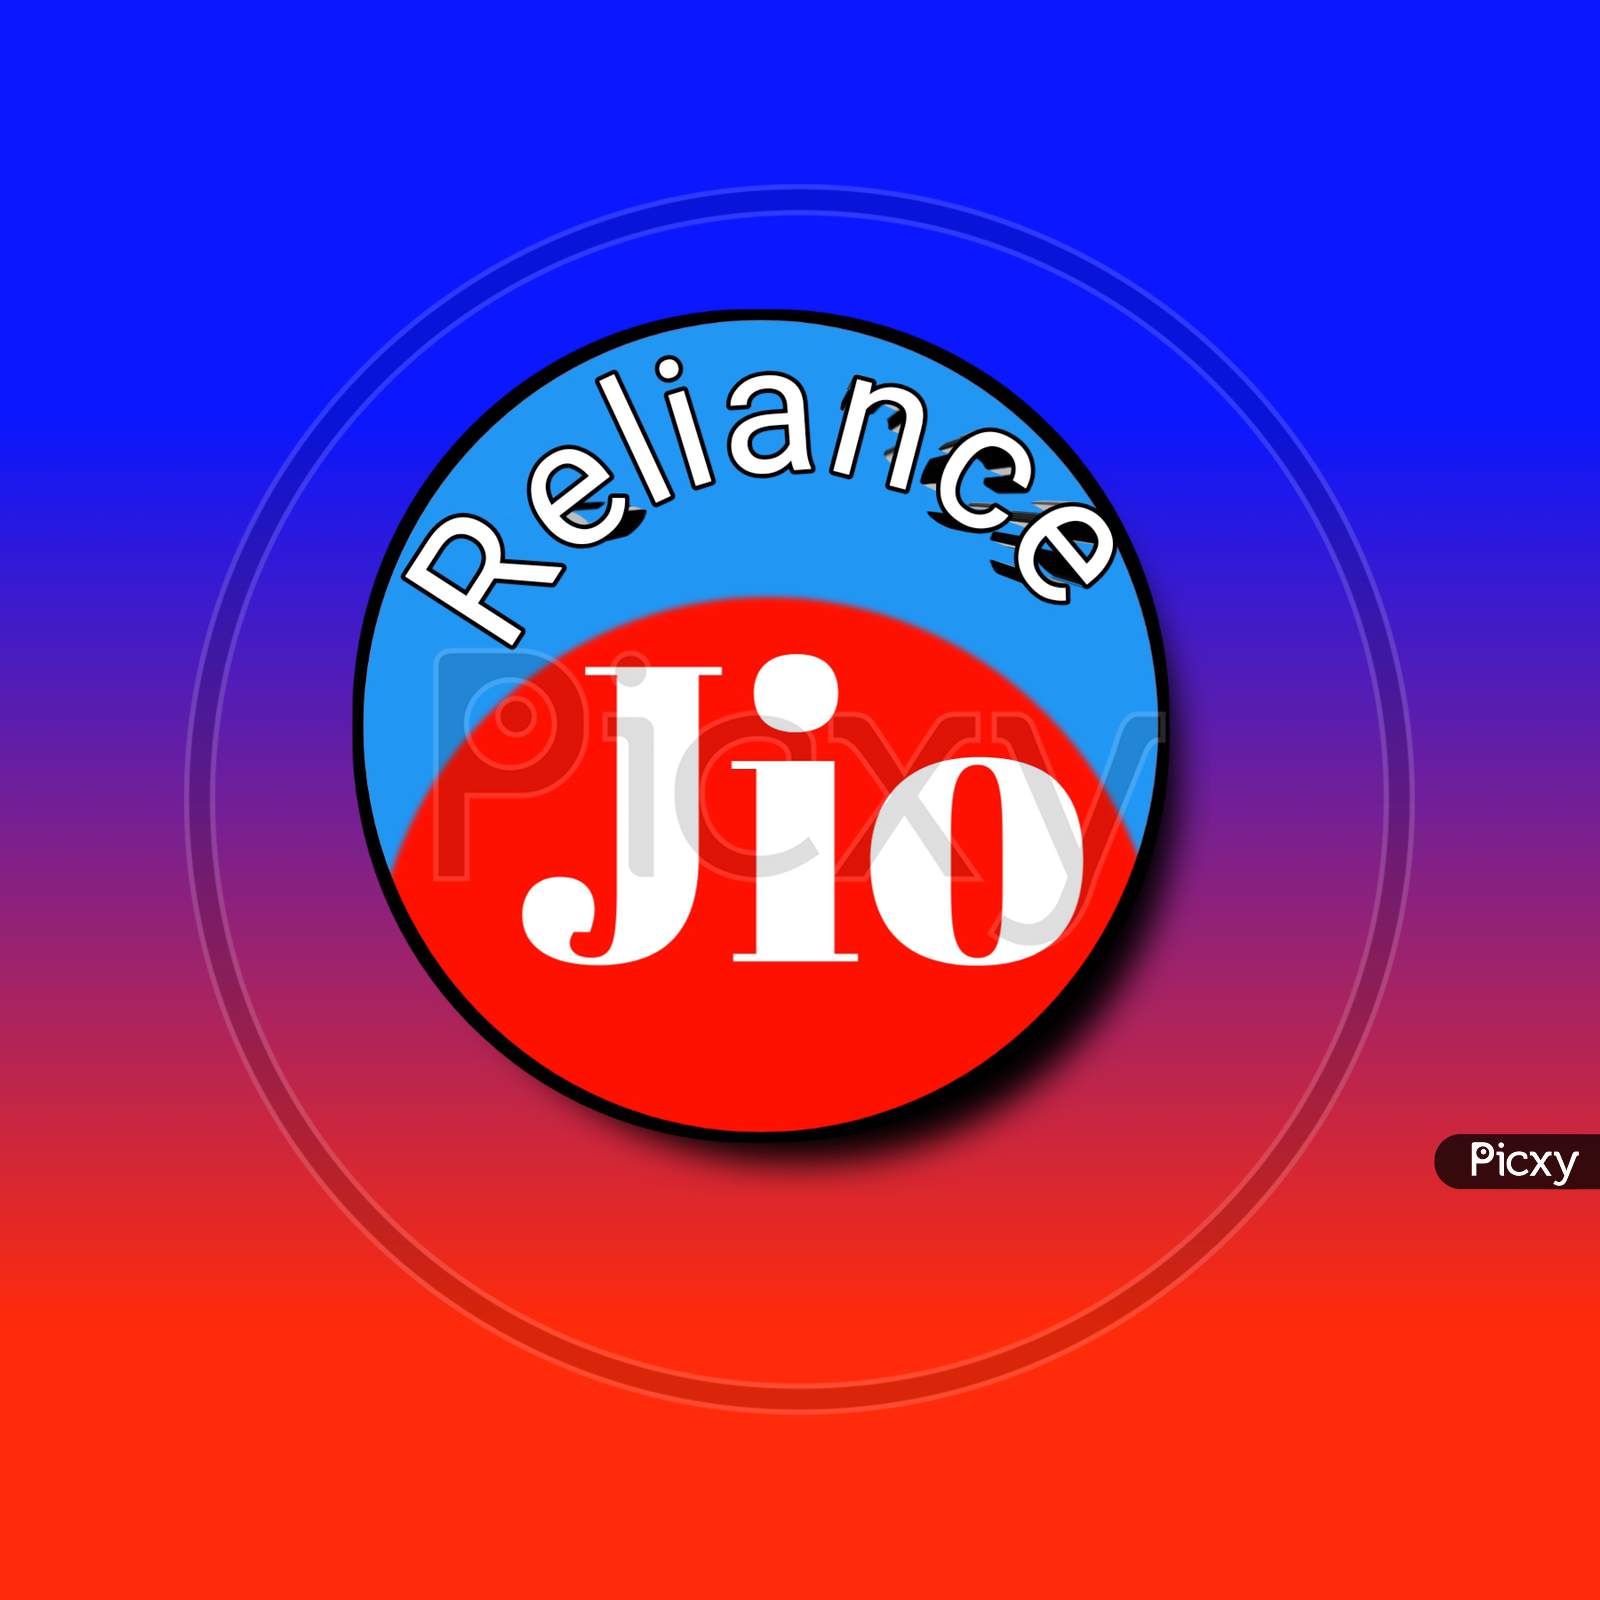 Jio, reliance, reliance jio, graphics for reliance jio ,reliance brand, reliance text blue